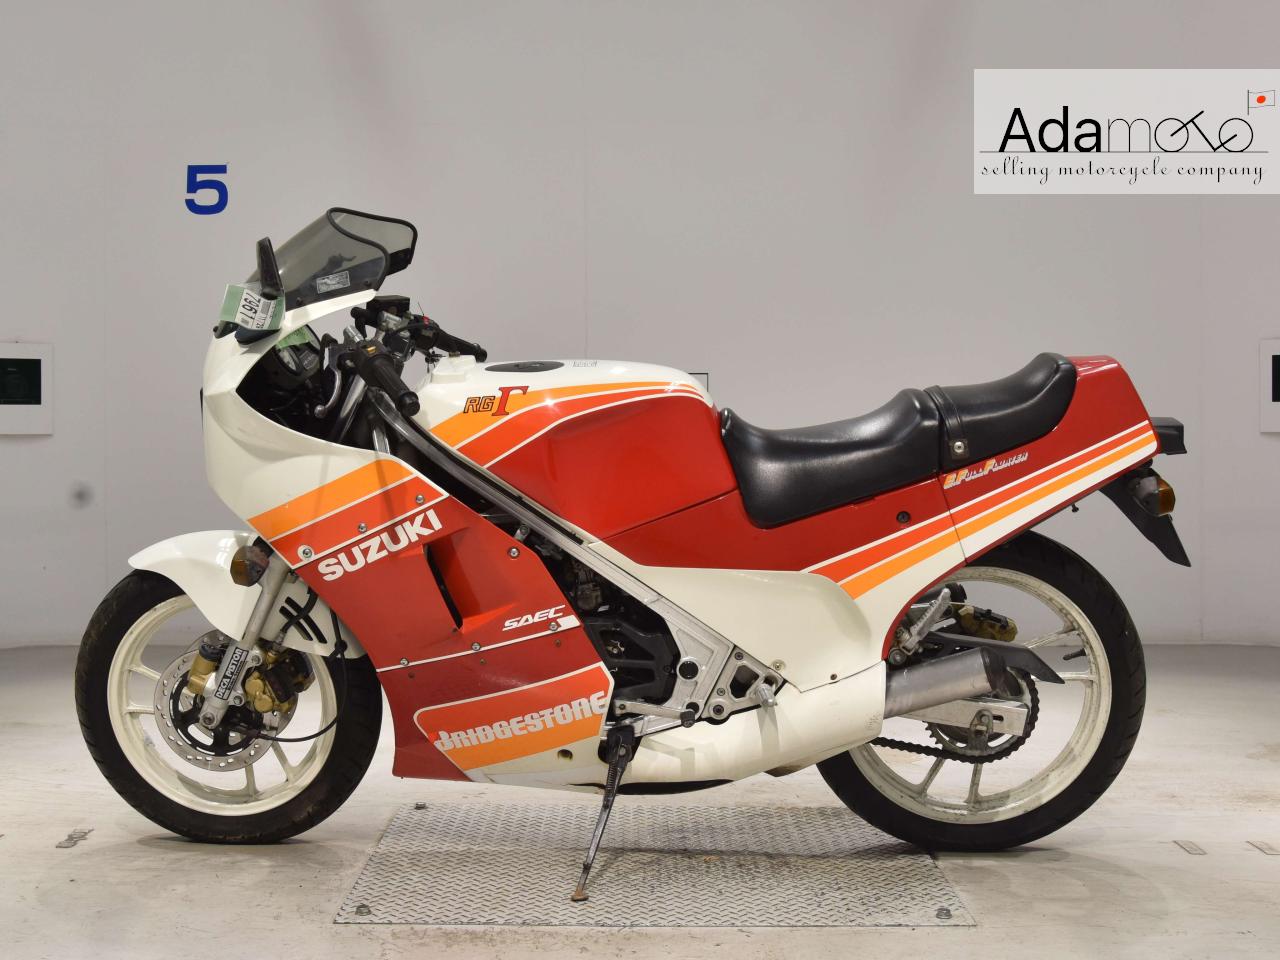 Suzuki RG250 GAMMA - Adamoto - Motorcycles from Japan